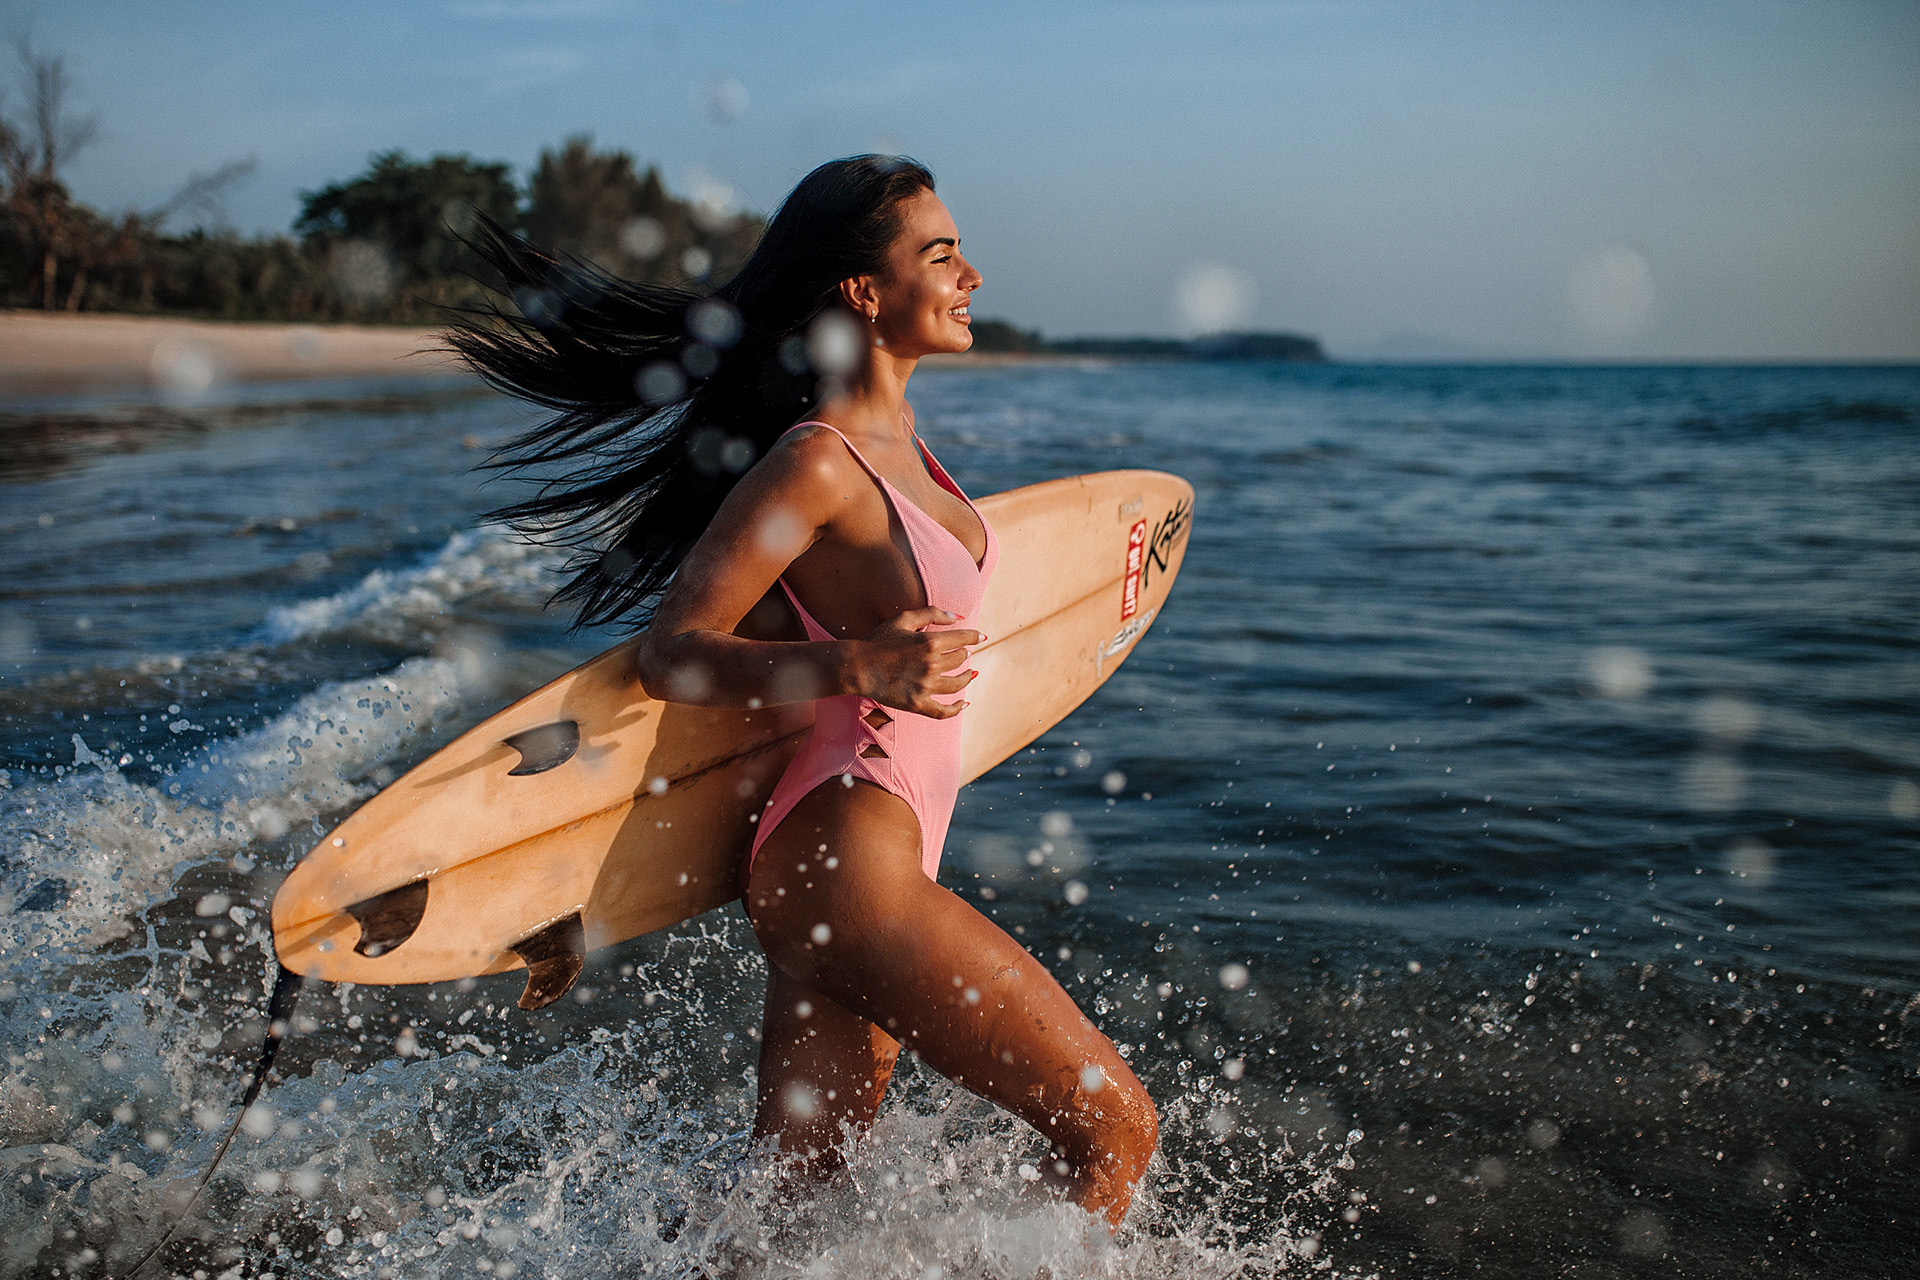 Image: Girl, sea, water, board, surfing, running, happy, brunette